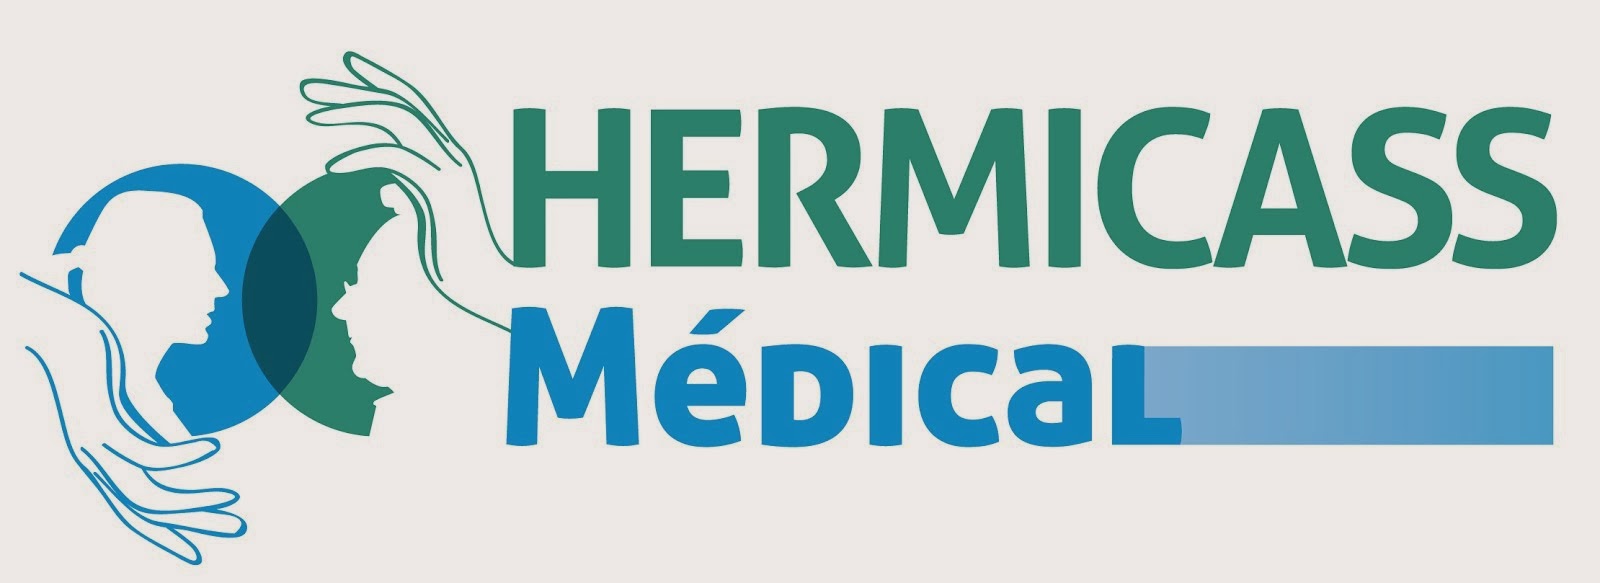 HERMICASS Médical